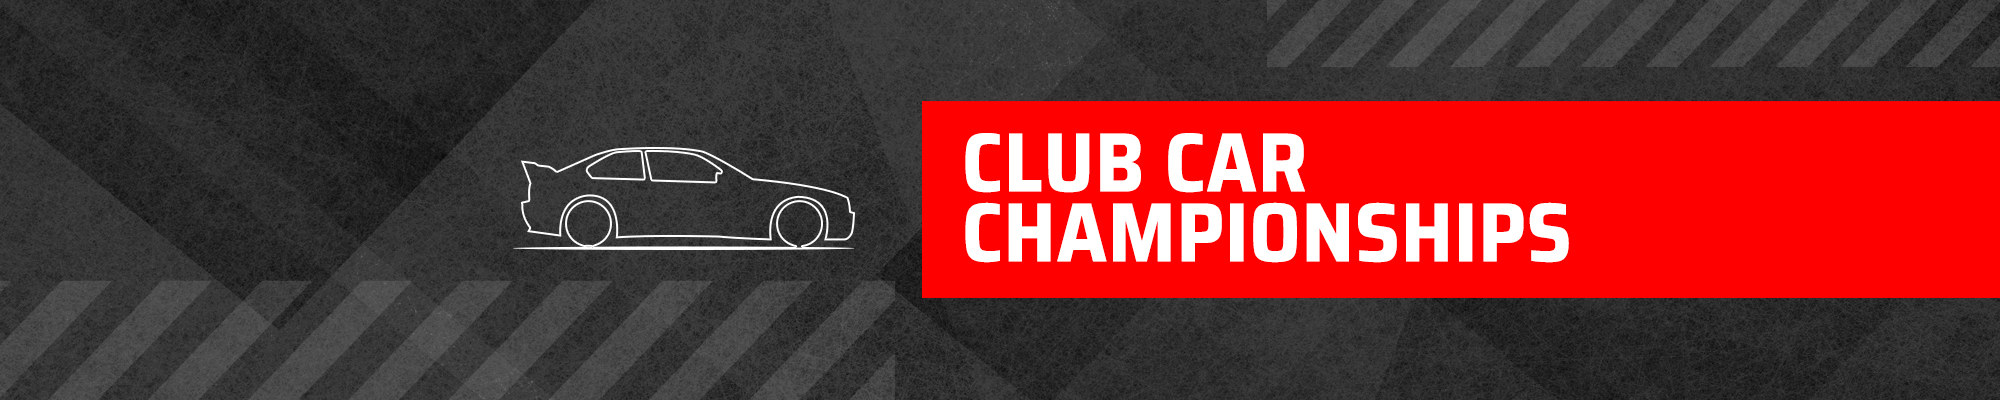 750MC Club Car Championships